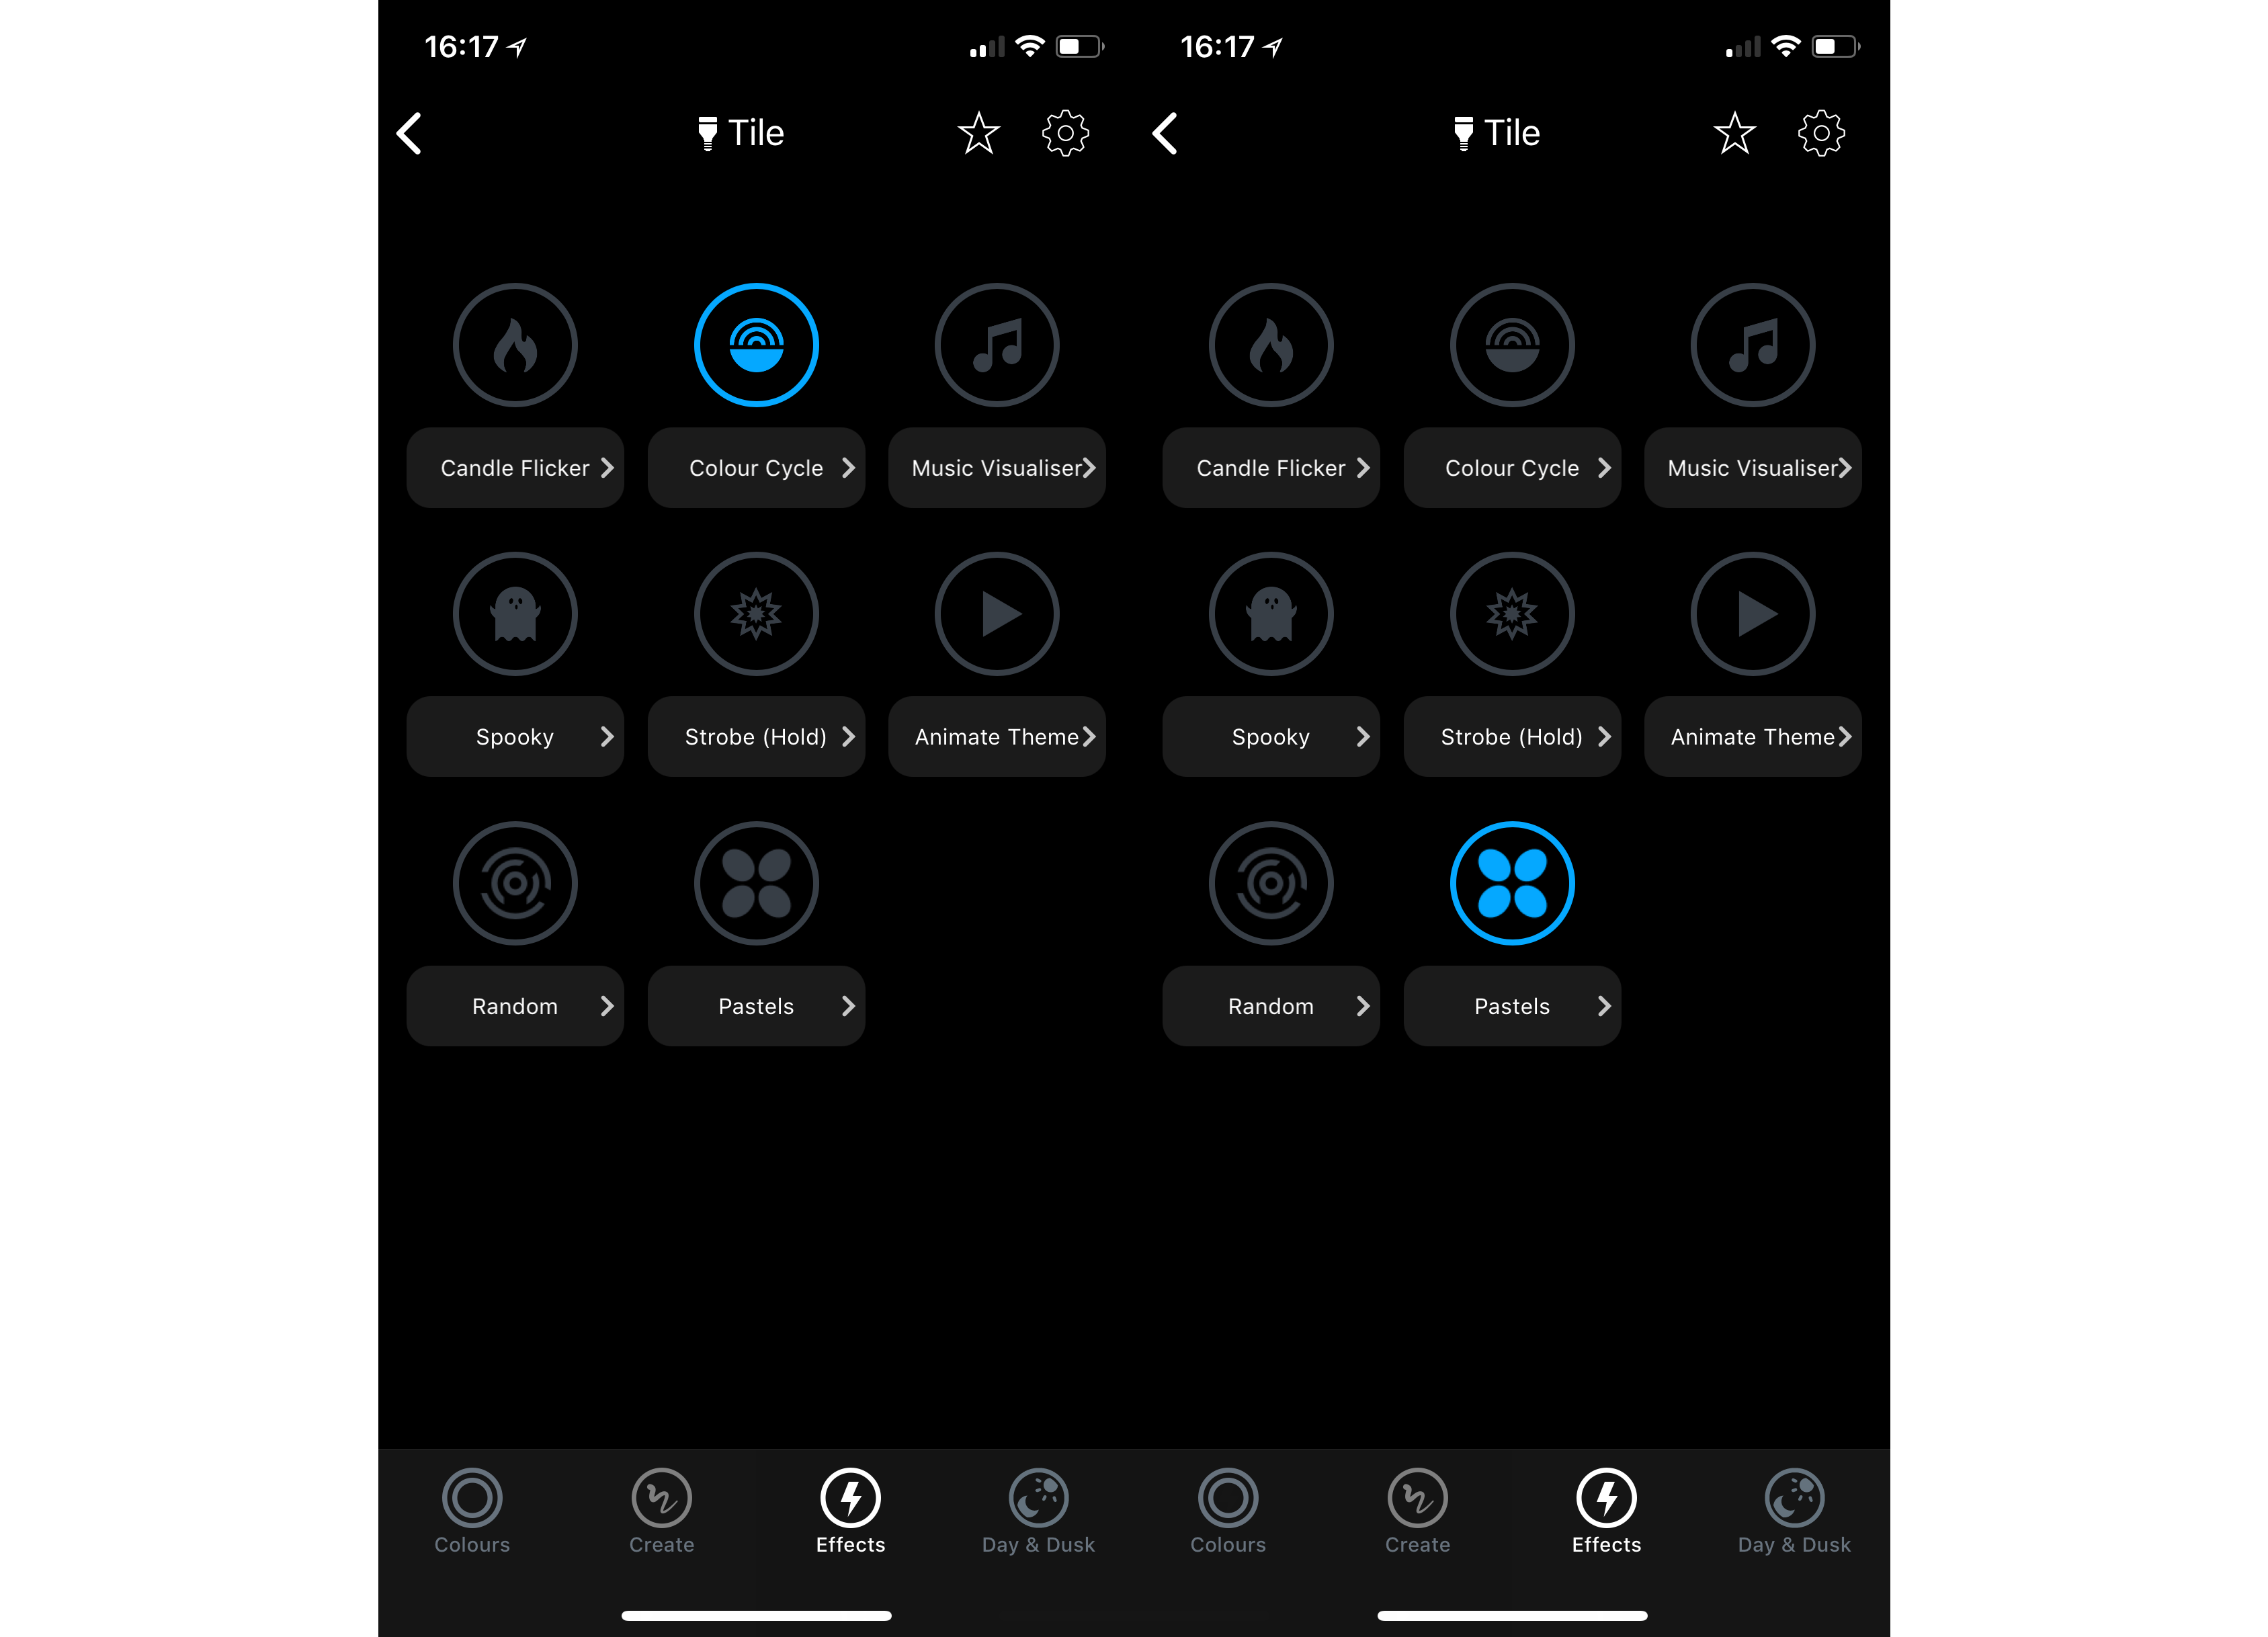 Screenshot of LIFX app showing Tile lighting effects options.